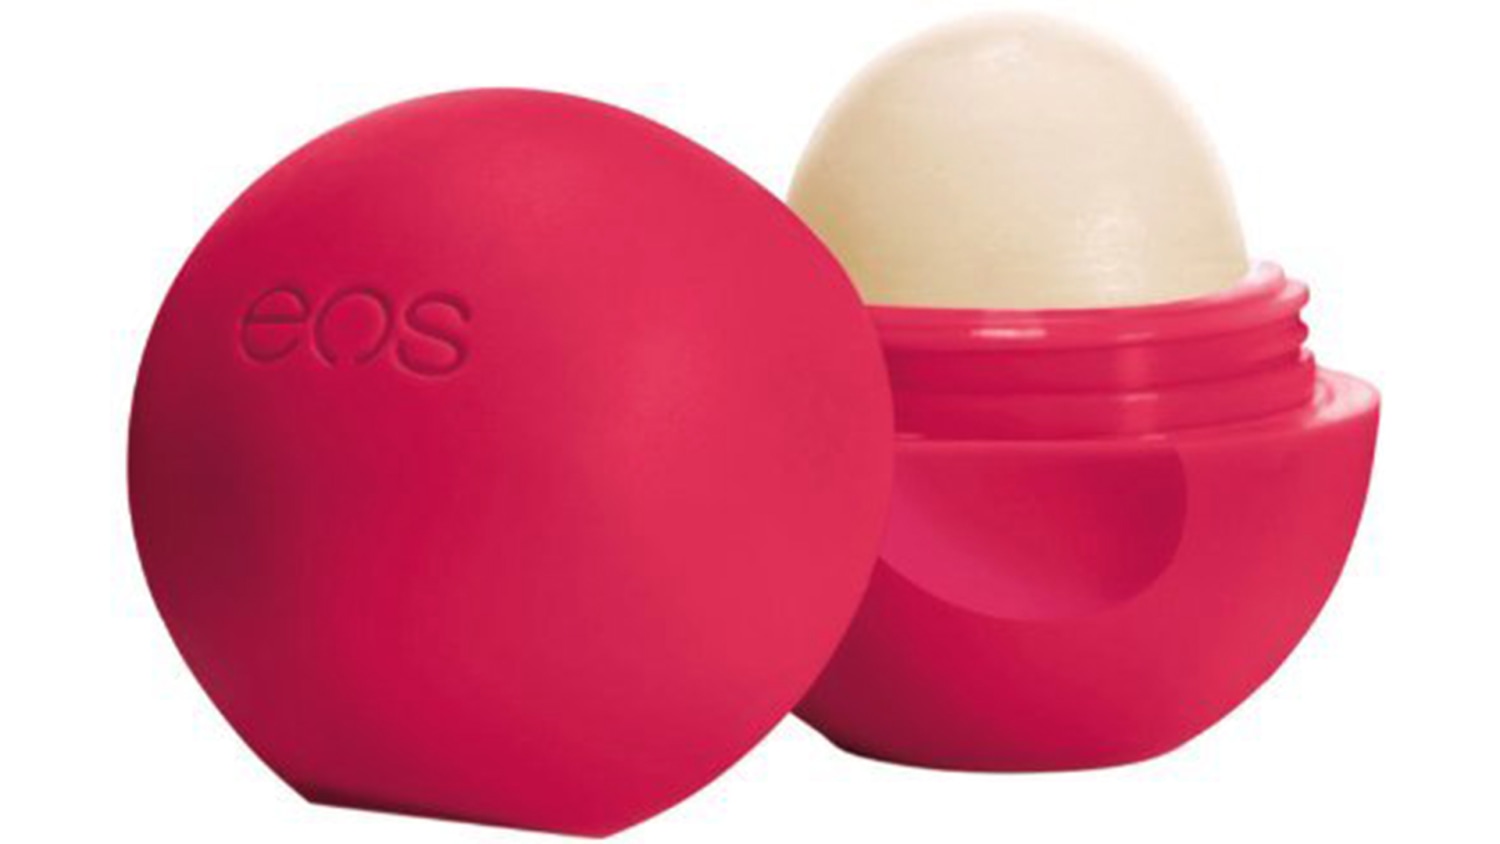 EOS Lawsuit Settled - Lip Balm Company Sued